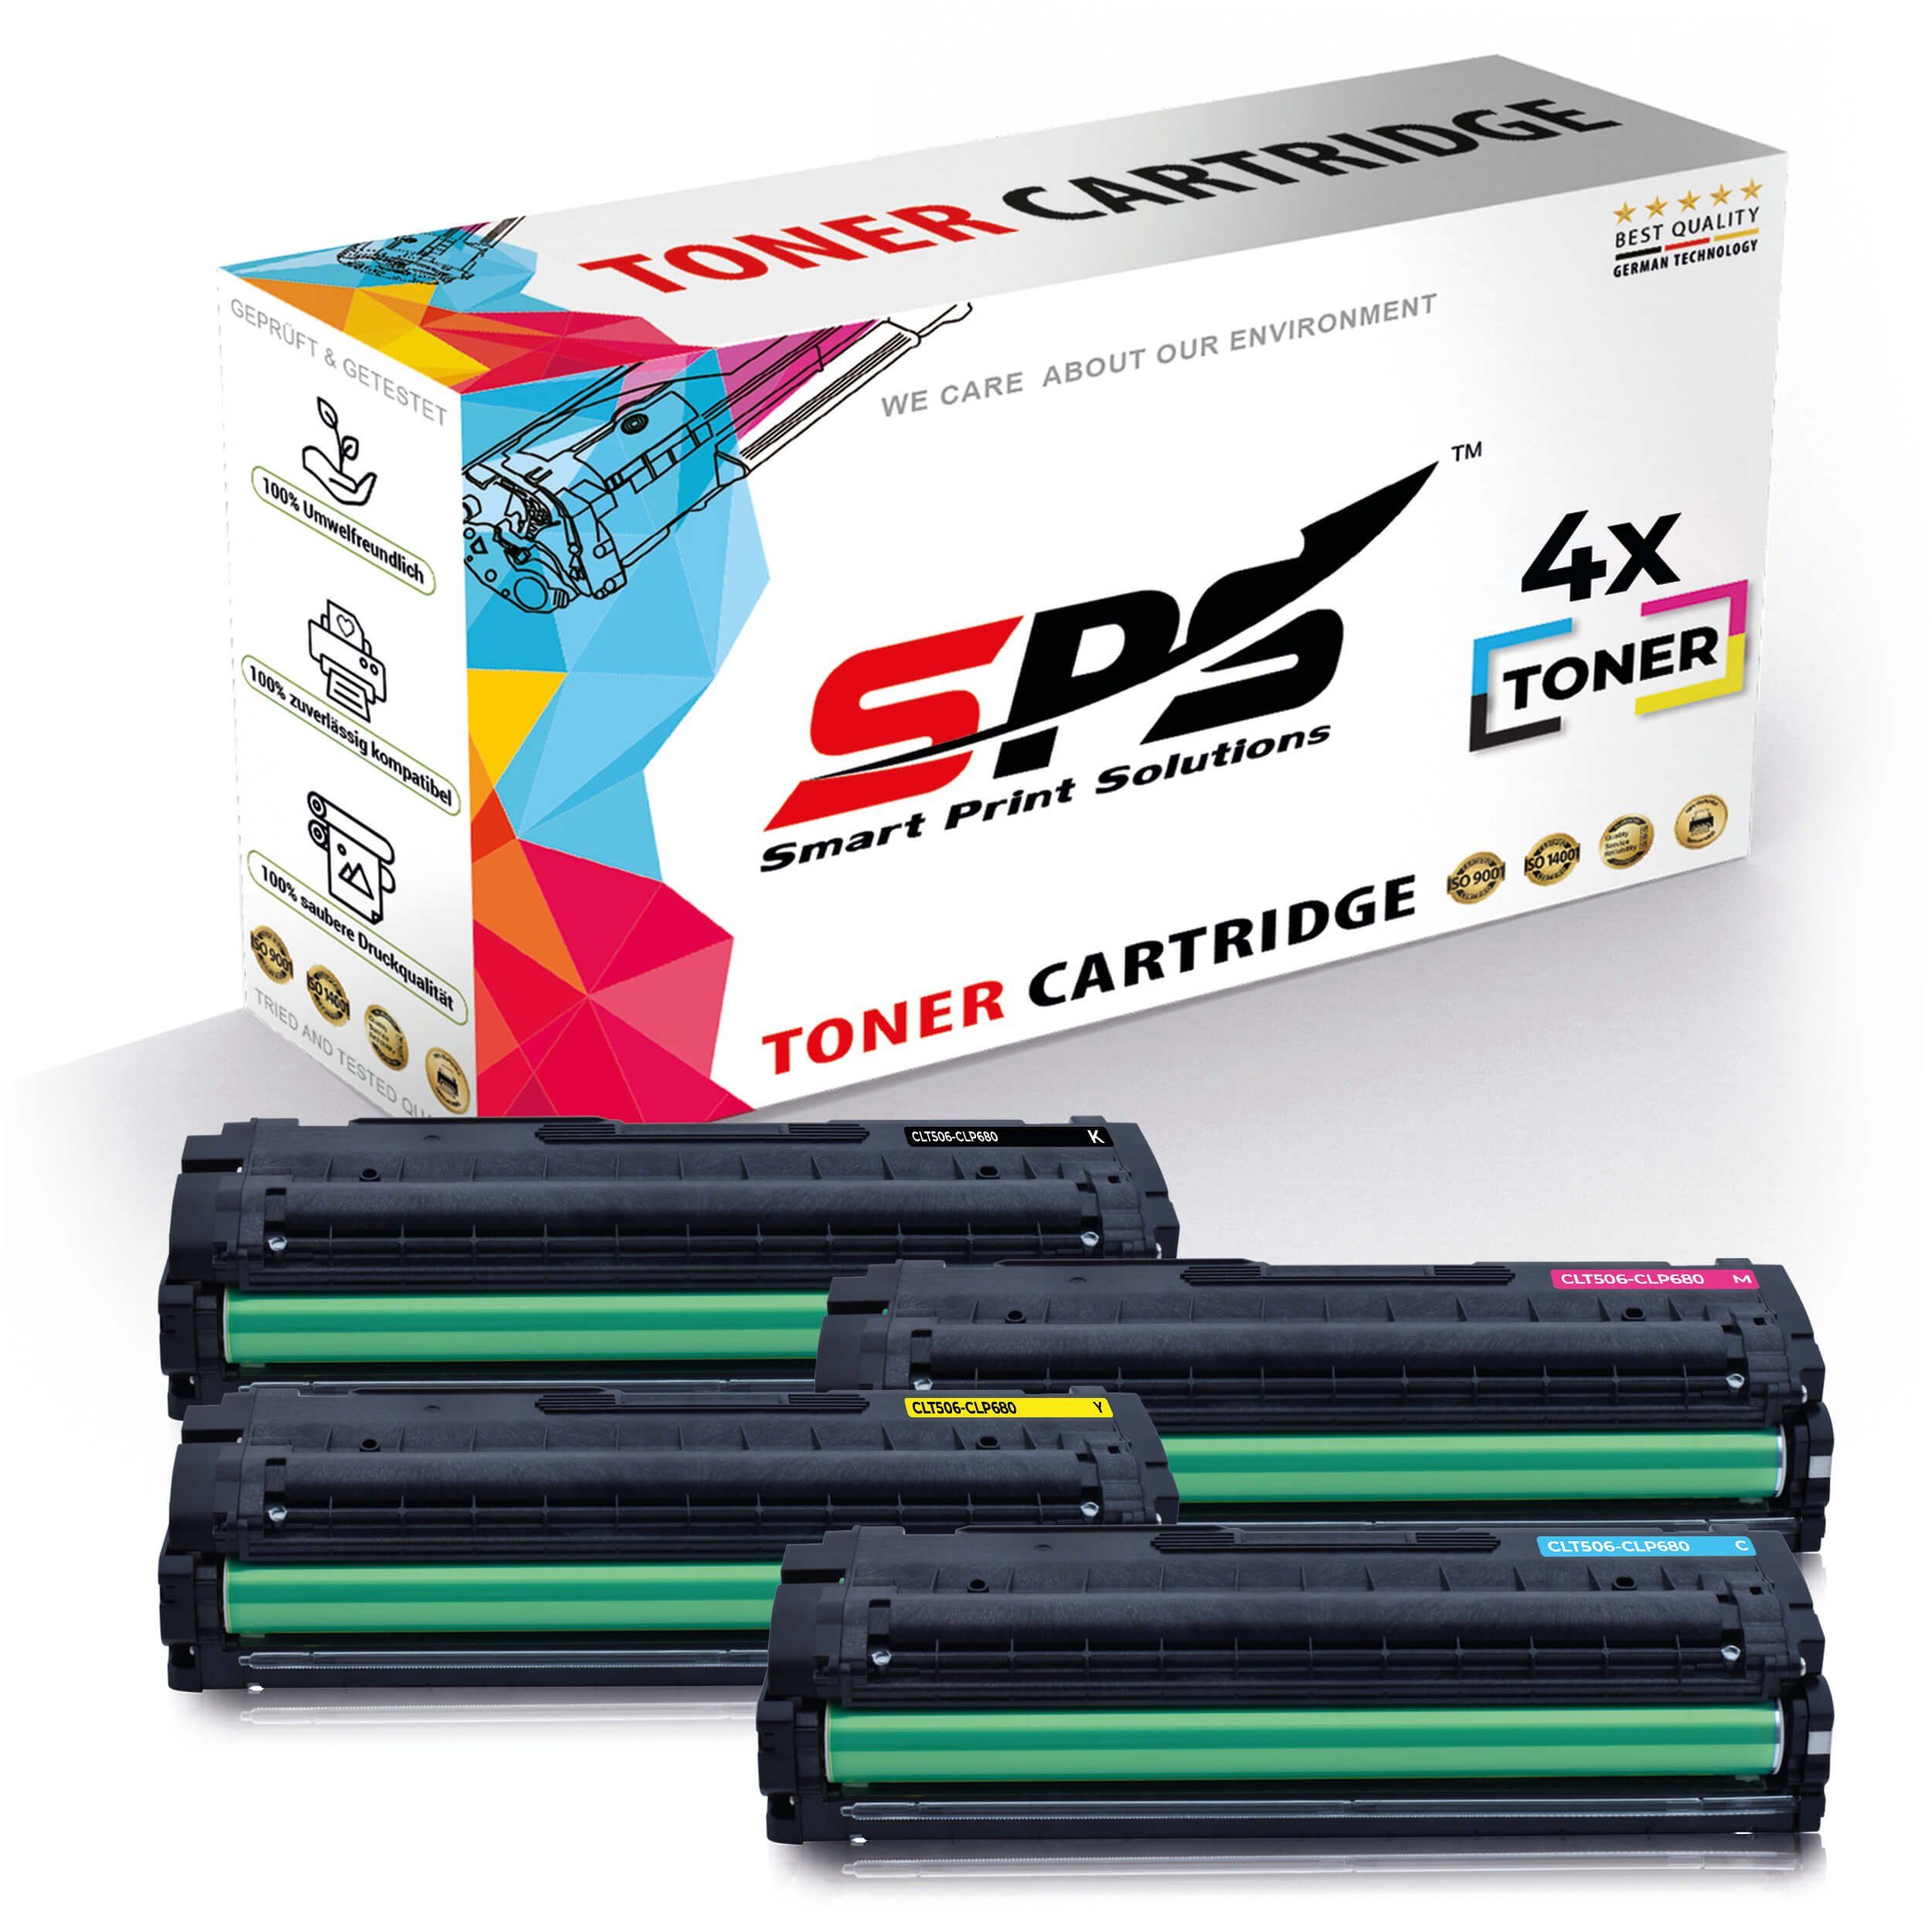 SPS Tonerkartusche »4x Multipack Set Kompatibel für Samsung CLX 6260«, (4er  Pack, 4x Toner)